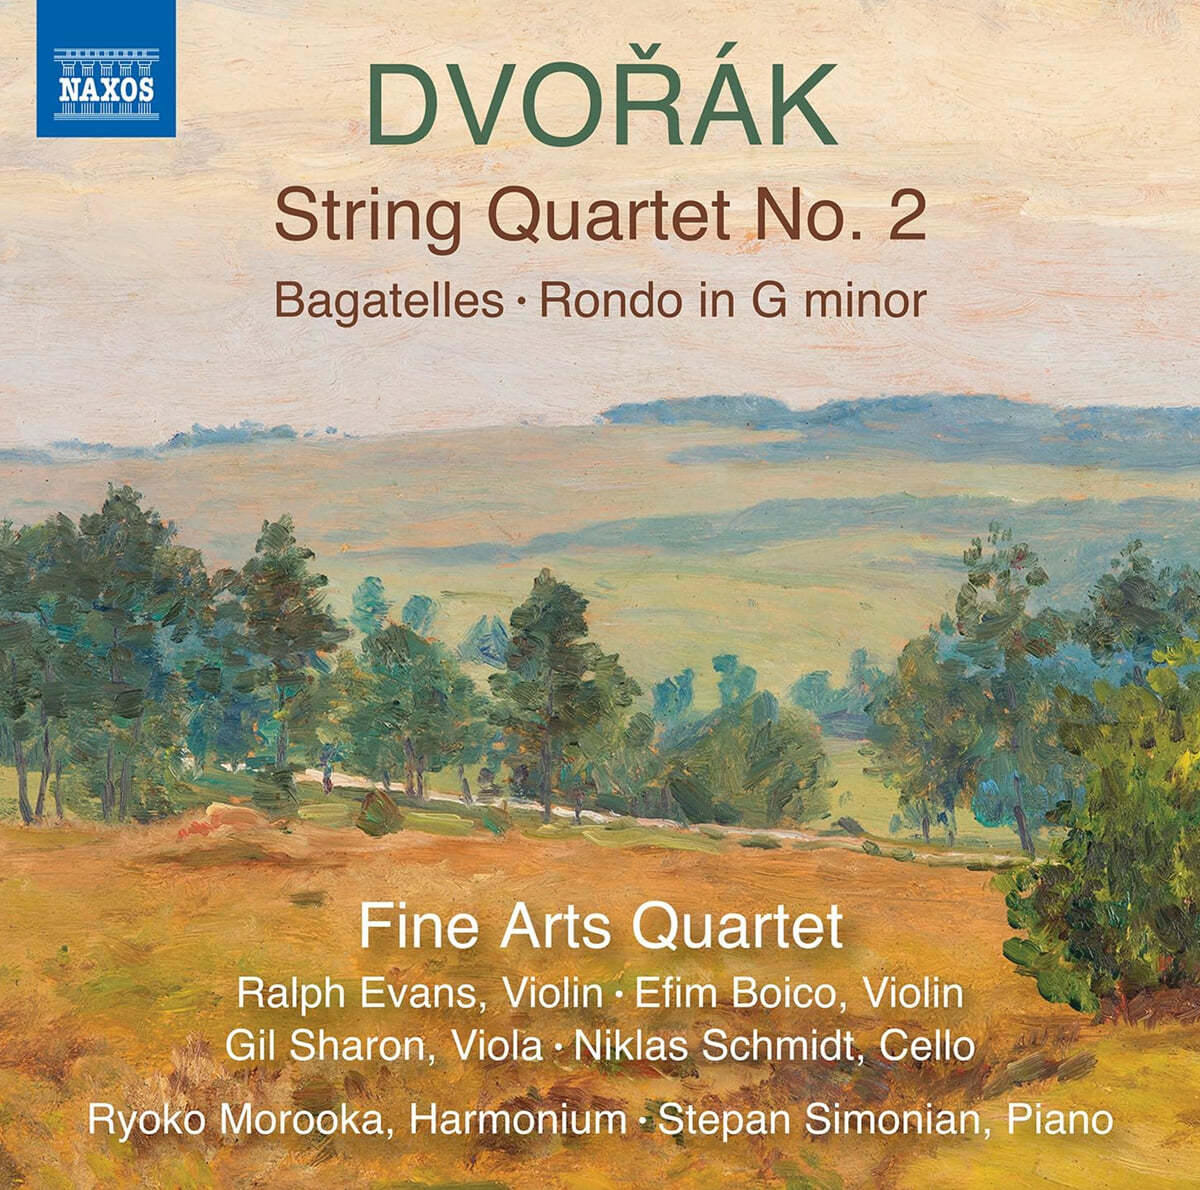 Fine Arts Quartet 드보르작: 바카텔, 현악사중주 2번, 론도 g단조 (Dvorak: String Quartet No. 2, Bagatelles &amp; Rondo, B. 171)